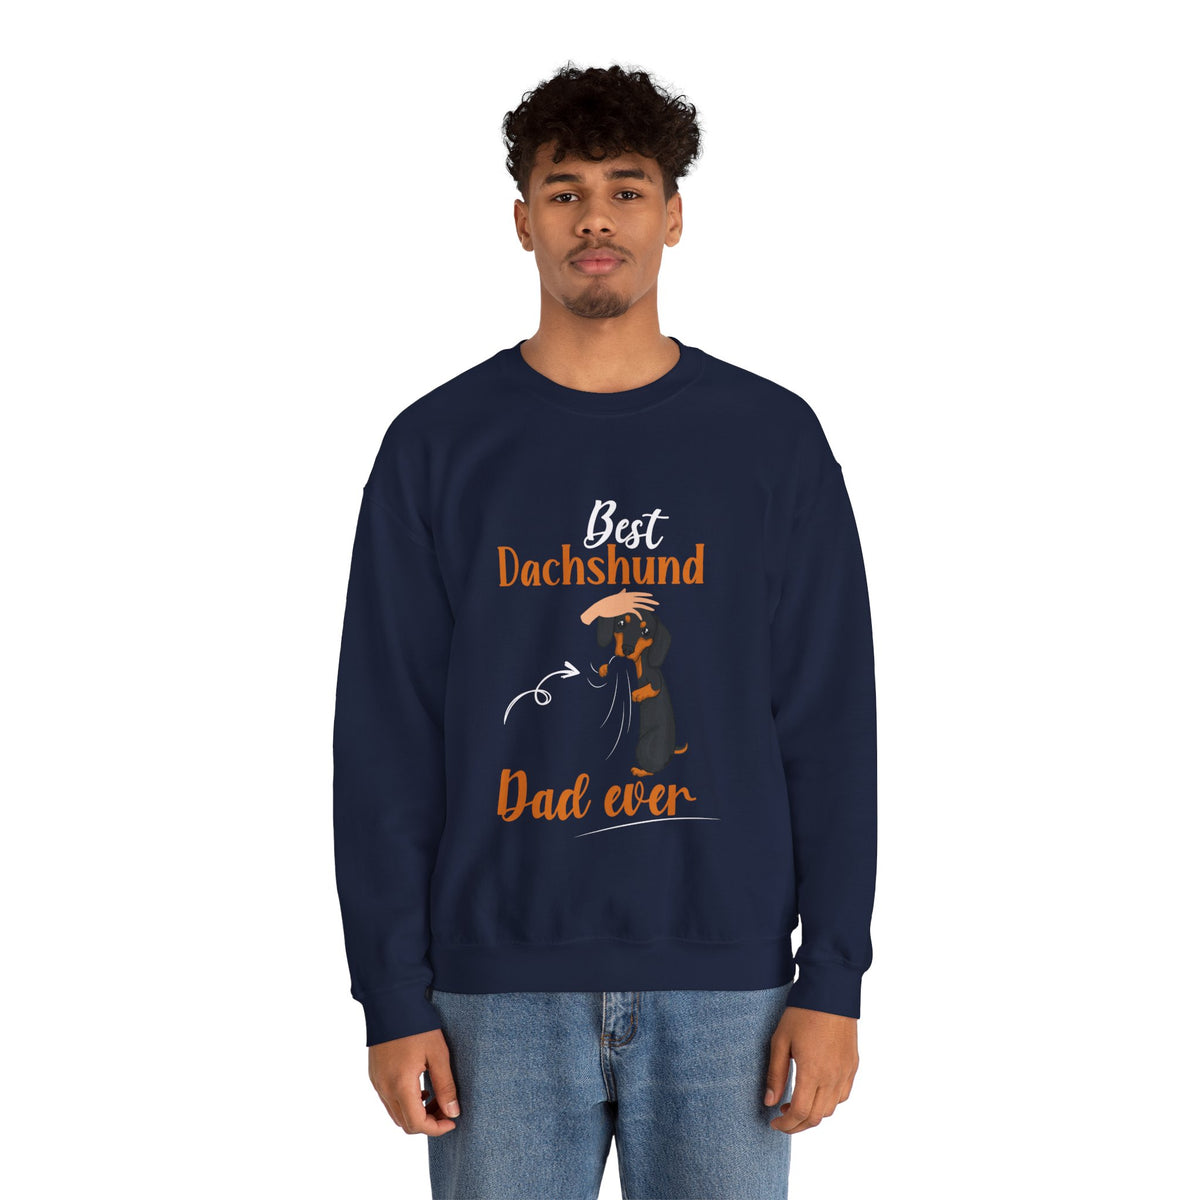 Dachshund Sweater / Dachshund Dog Sweater